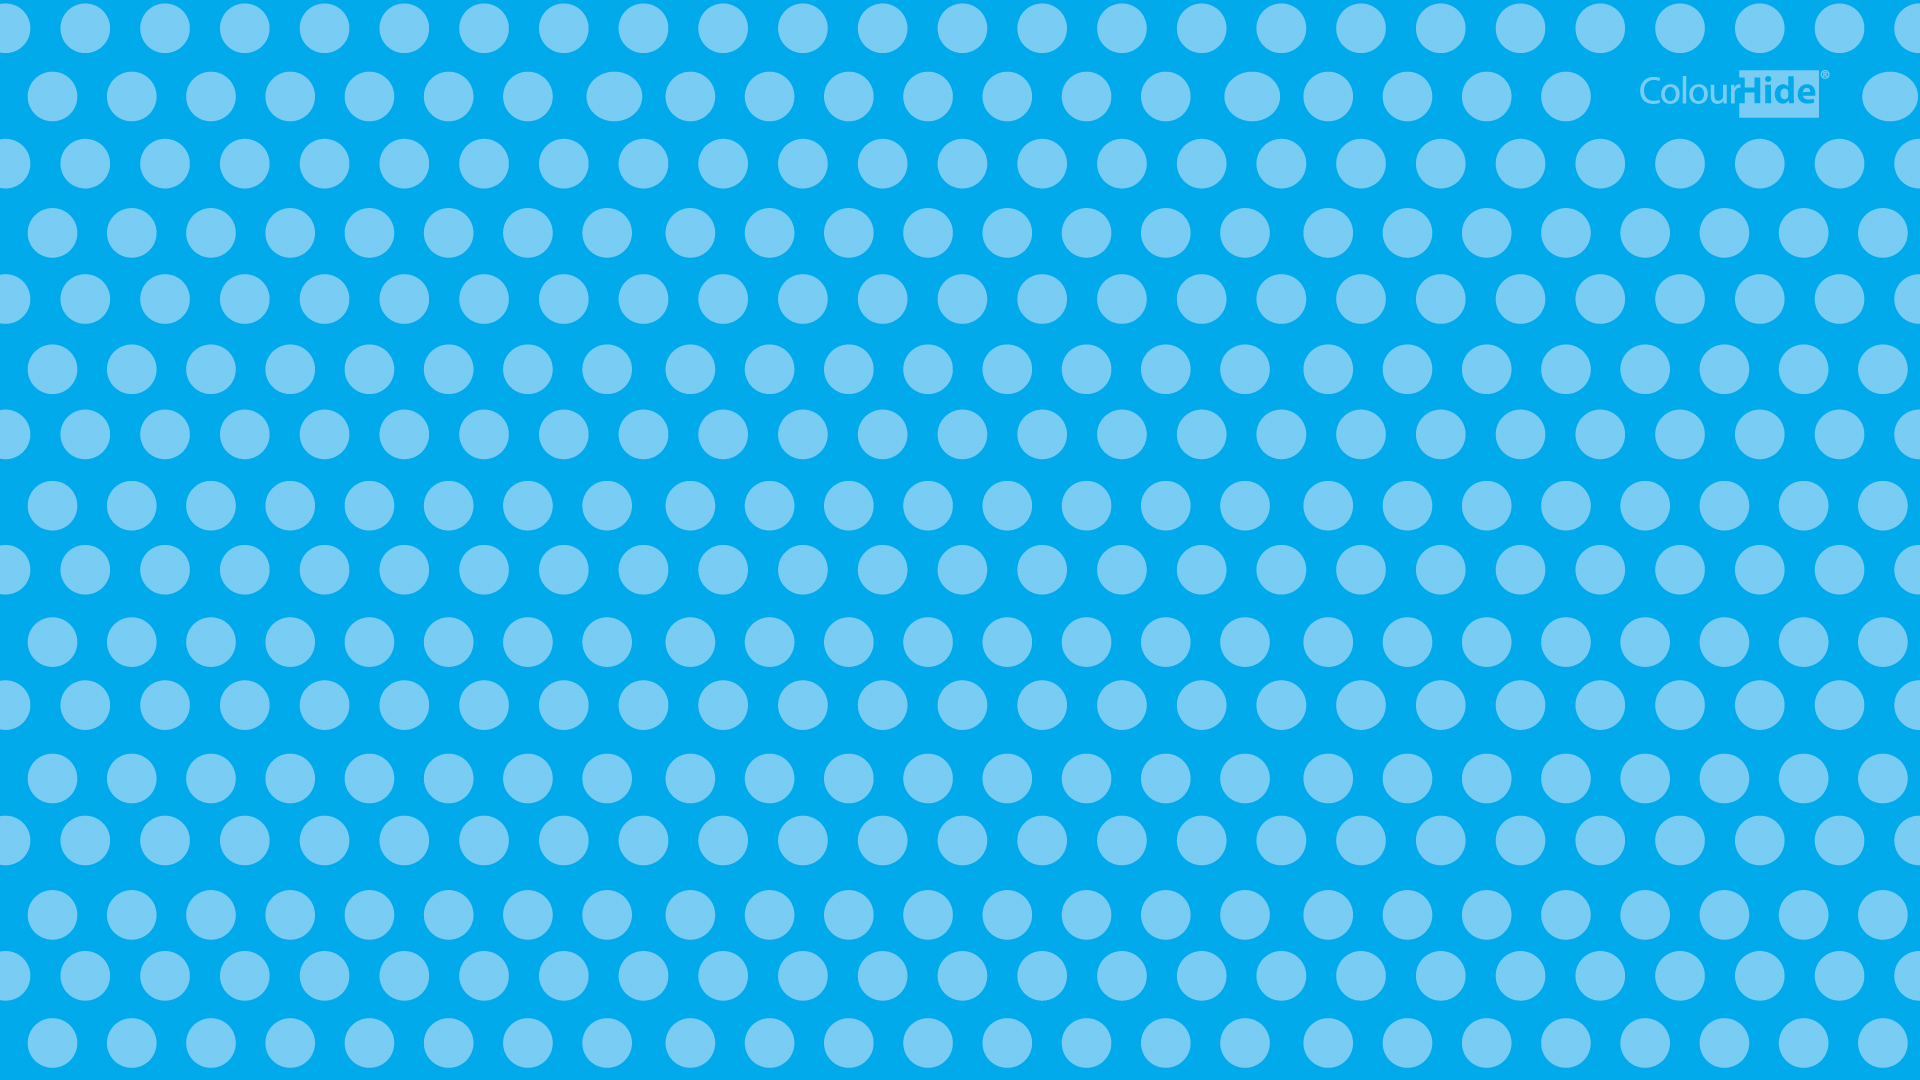 Free Download Dot Backgrounds | PixelsTalk.Net